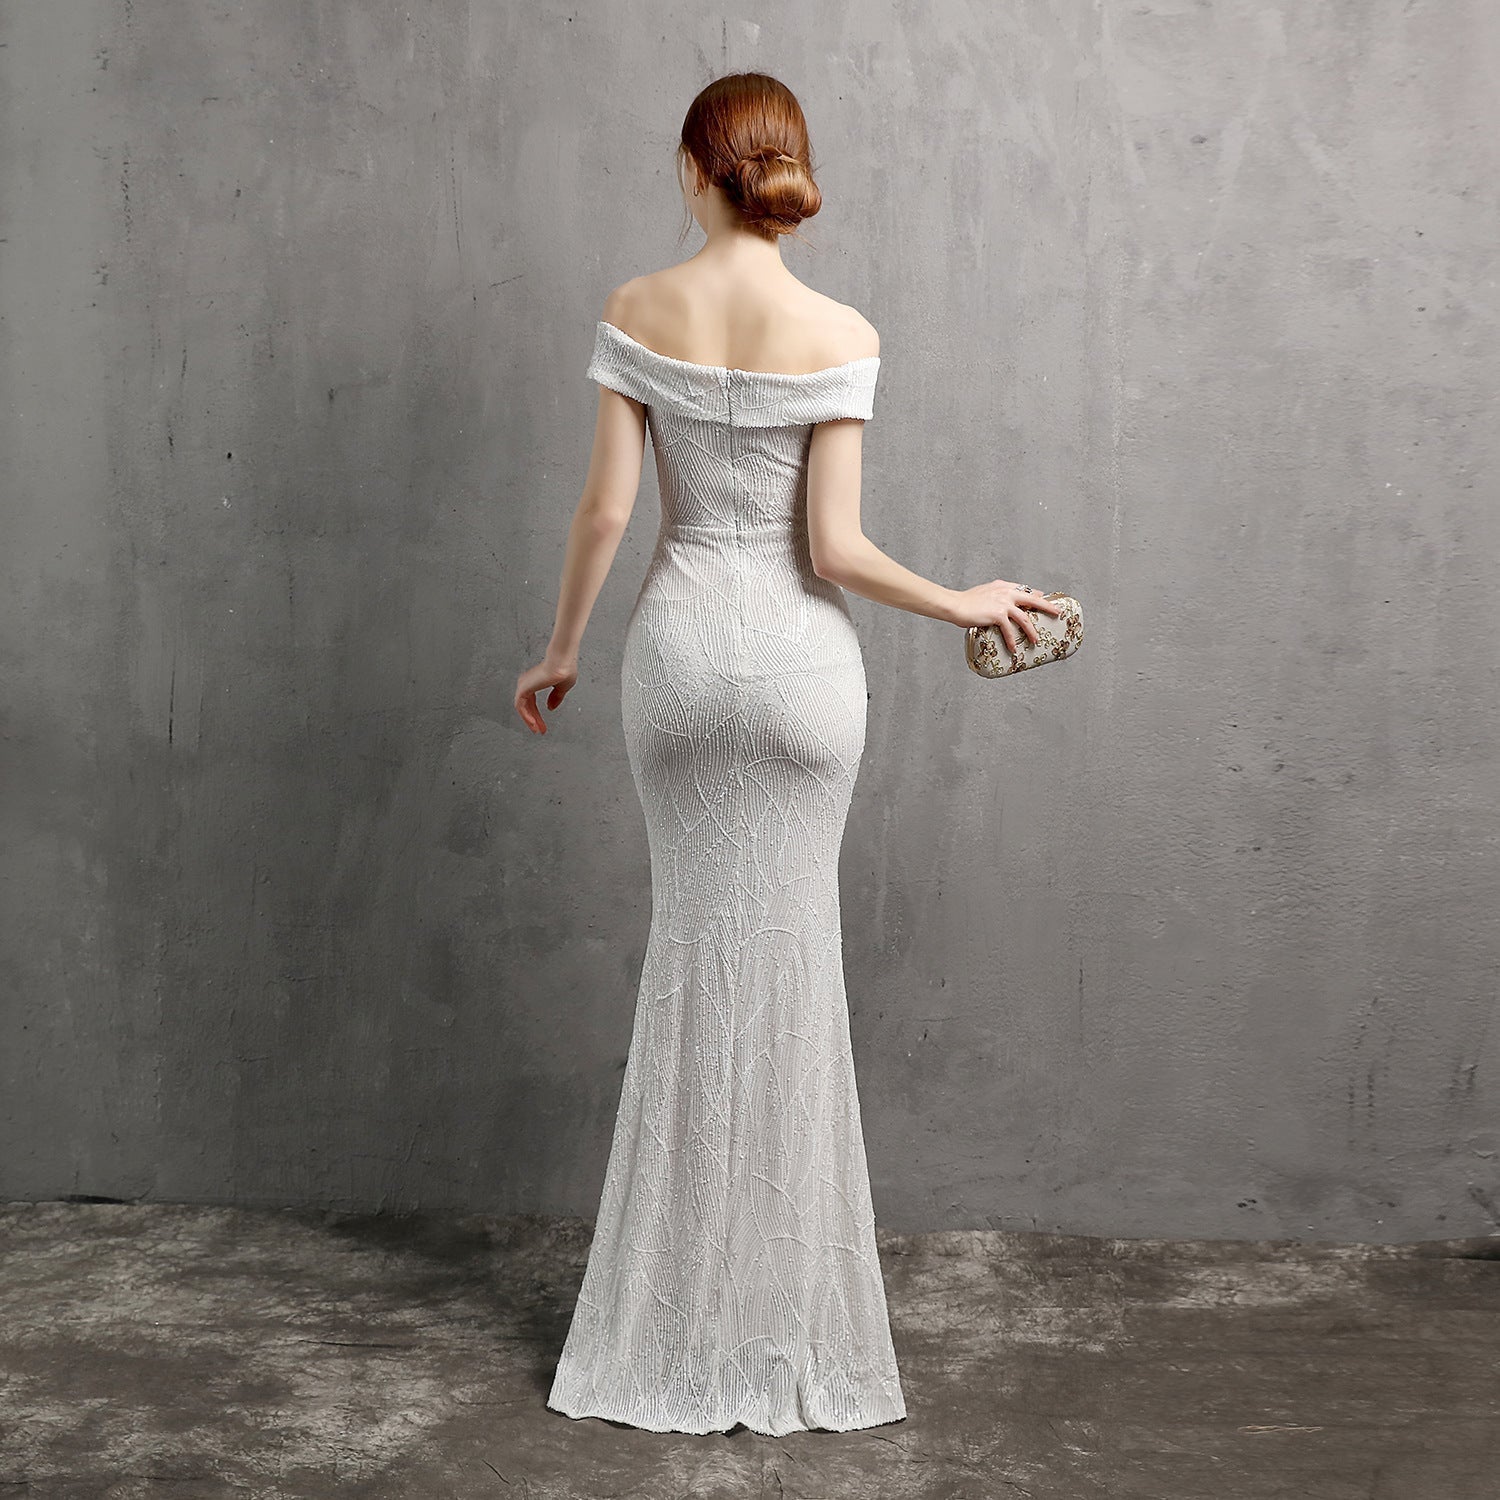 Clara Glitter Off the Shoulder Split Dresses For Prom